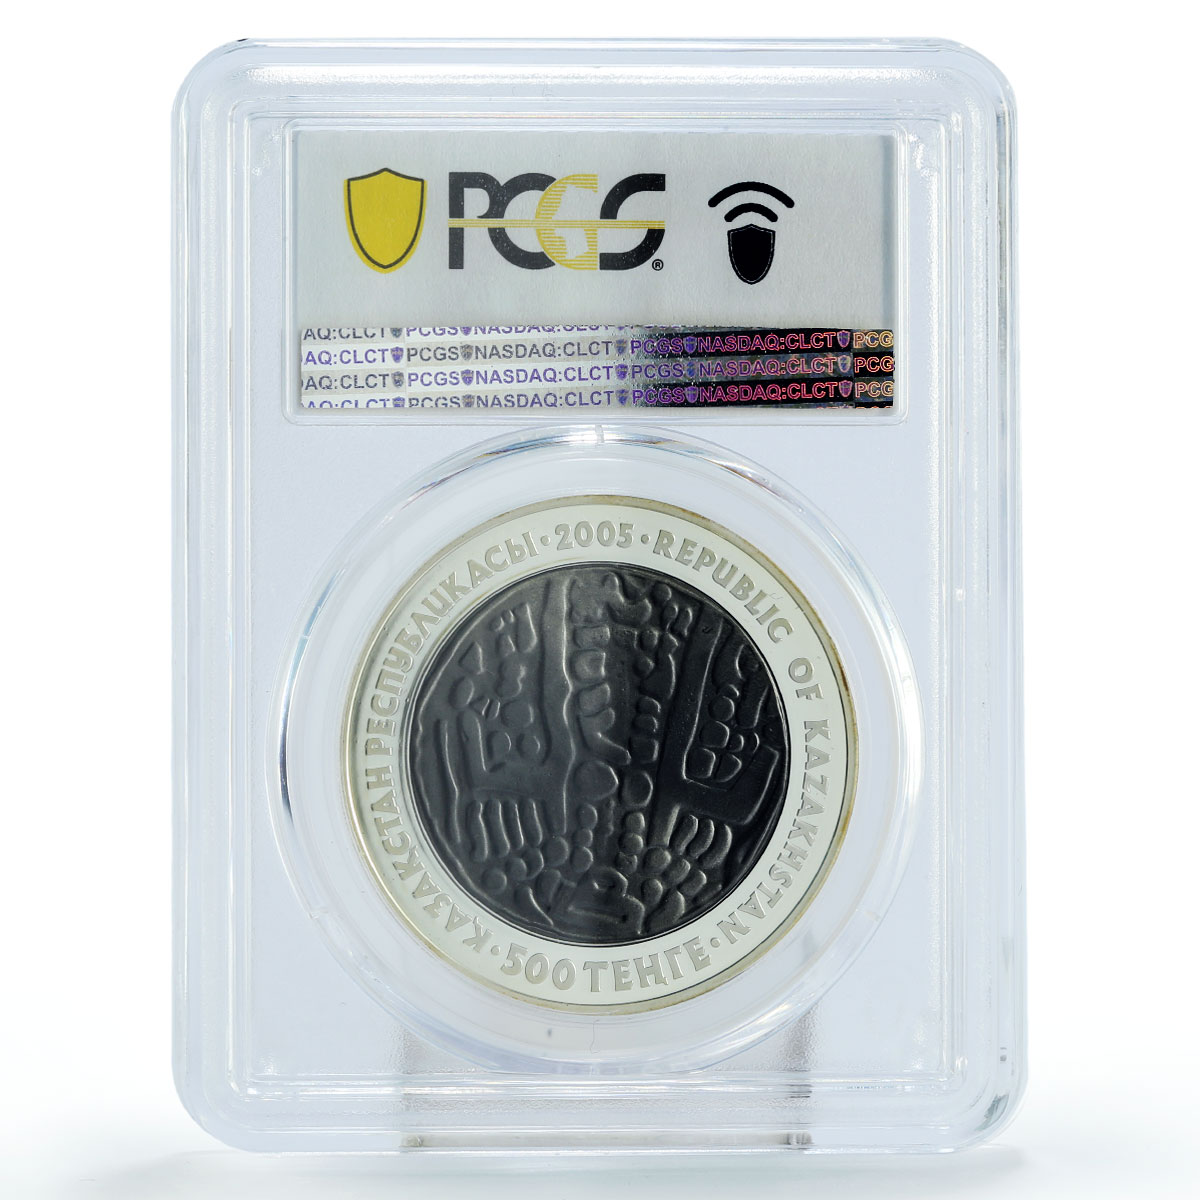 Kazakhstan 500 tenge Coins of Old Design Drakhma PR70 PCGS silver coin 2005